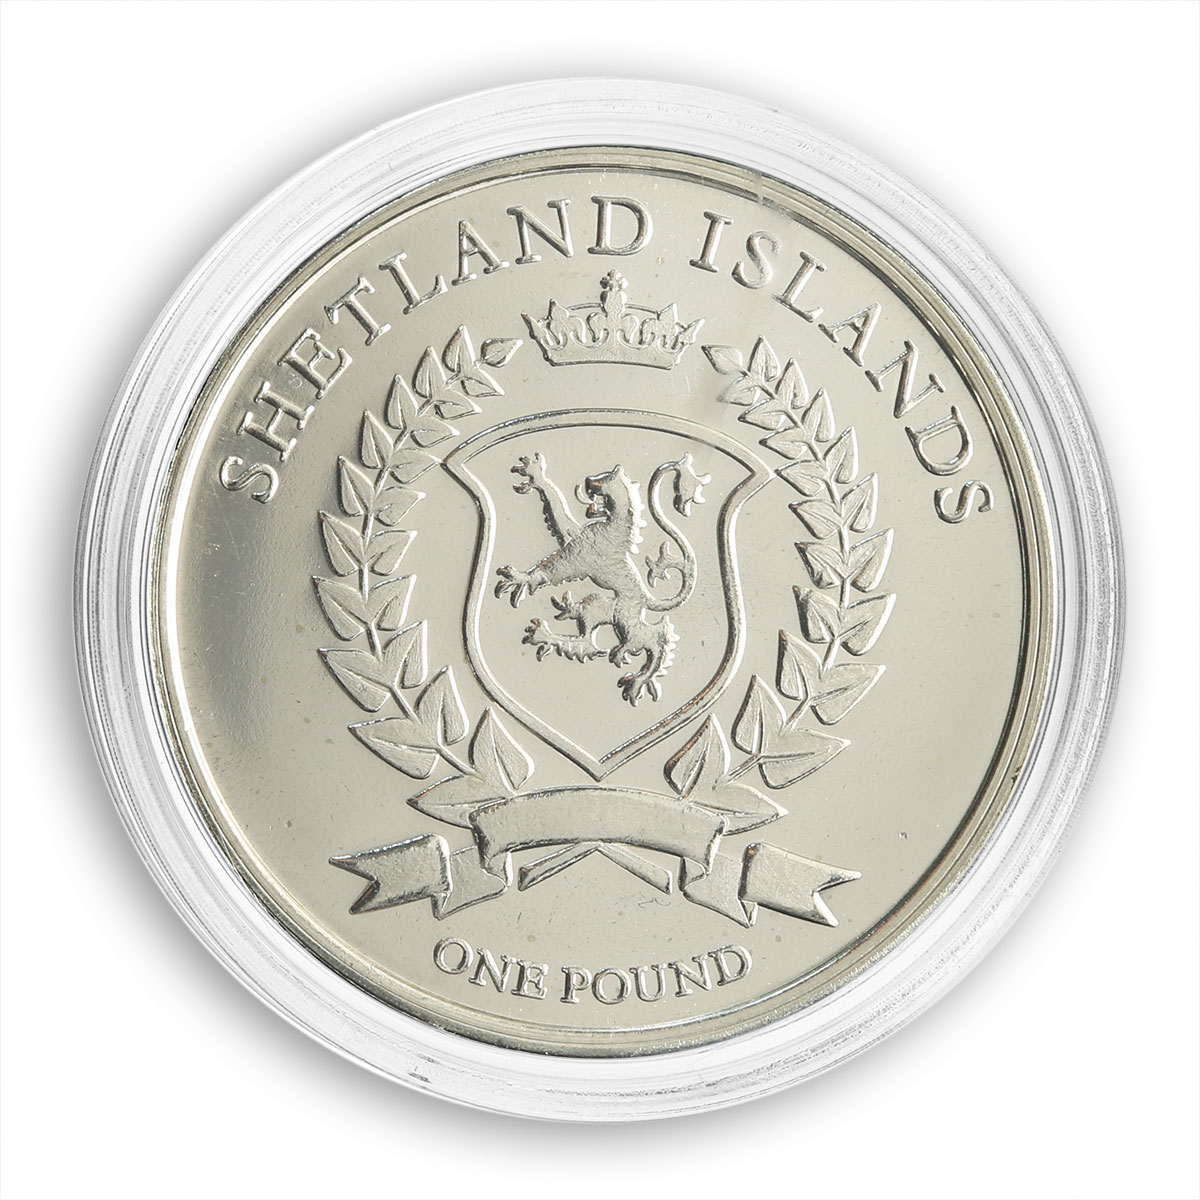 Shetland Islands, 1 pound, Tringa Glareola, bird, fauna, nature, coin, 2015